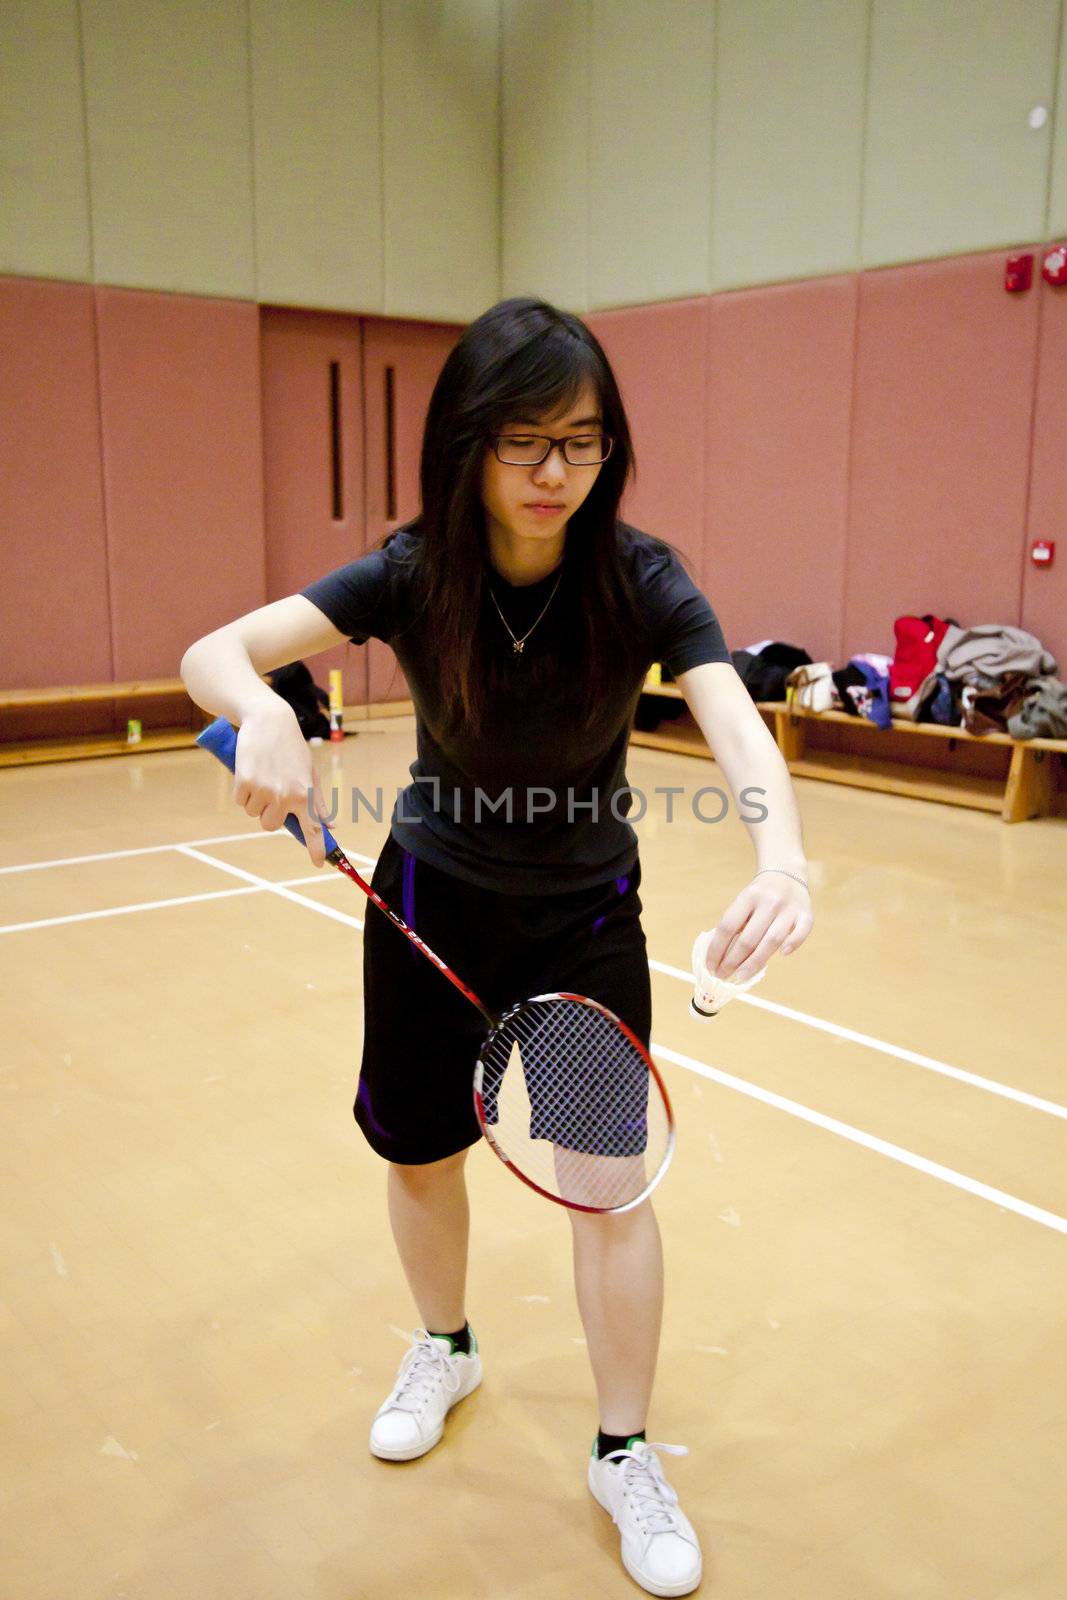 Asian woman playing badminton by kawing921